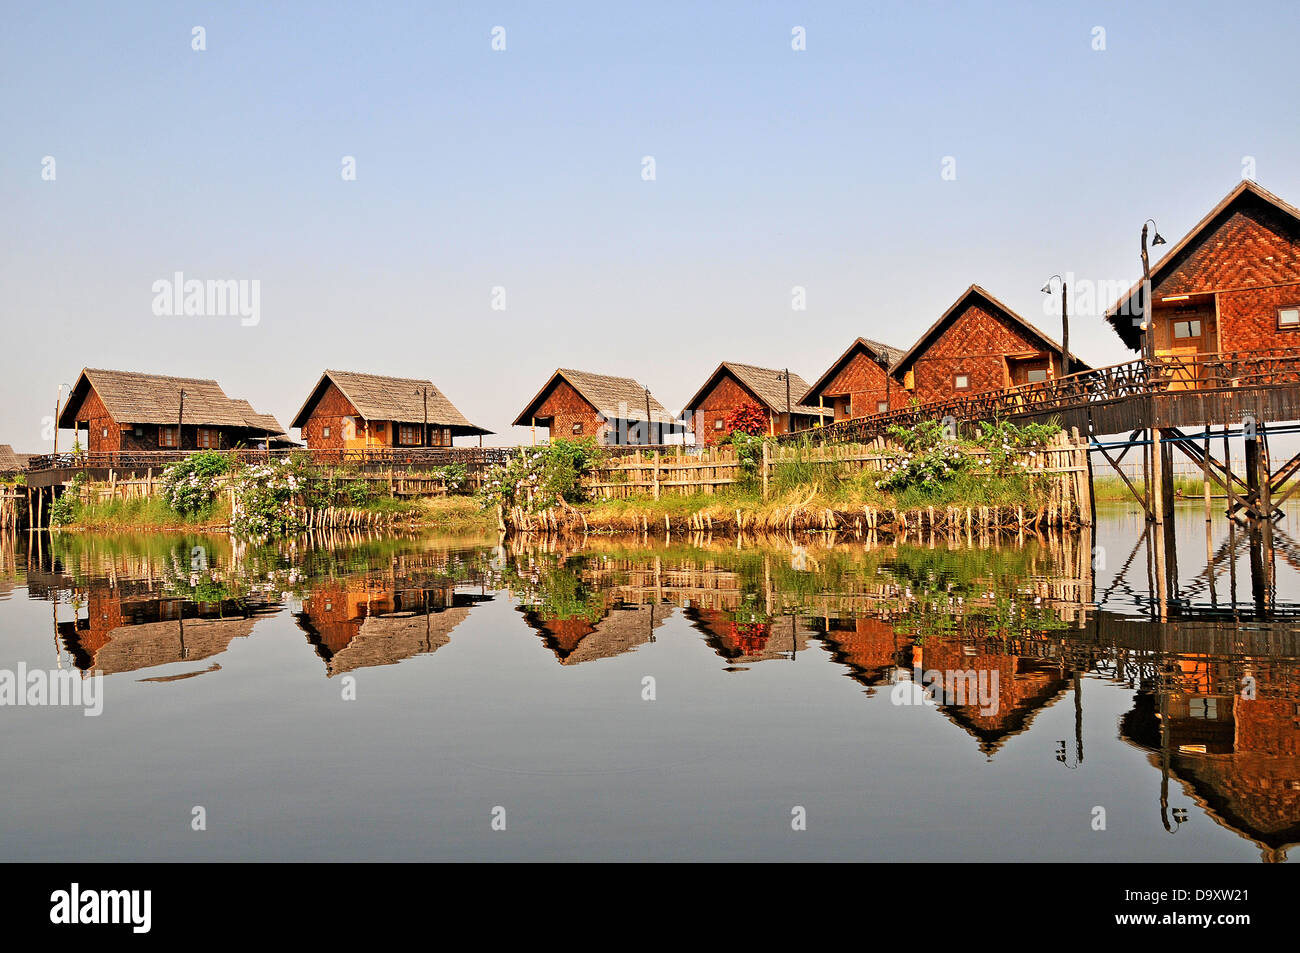 hotel room on stilts Inle lake Myanmar Stock Photo